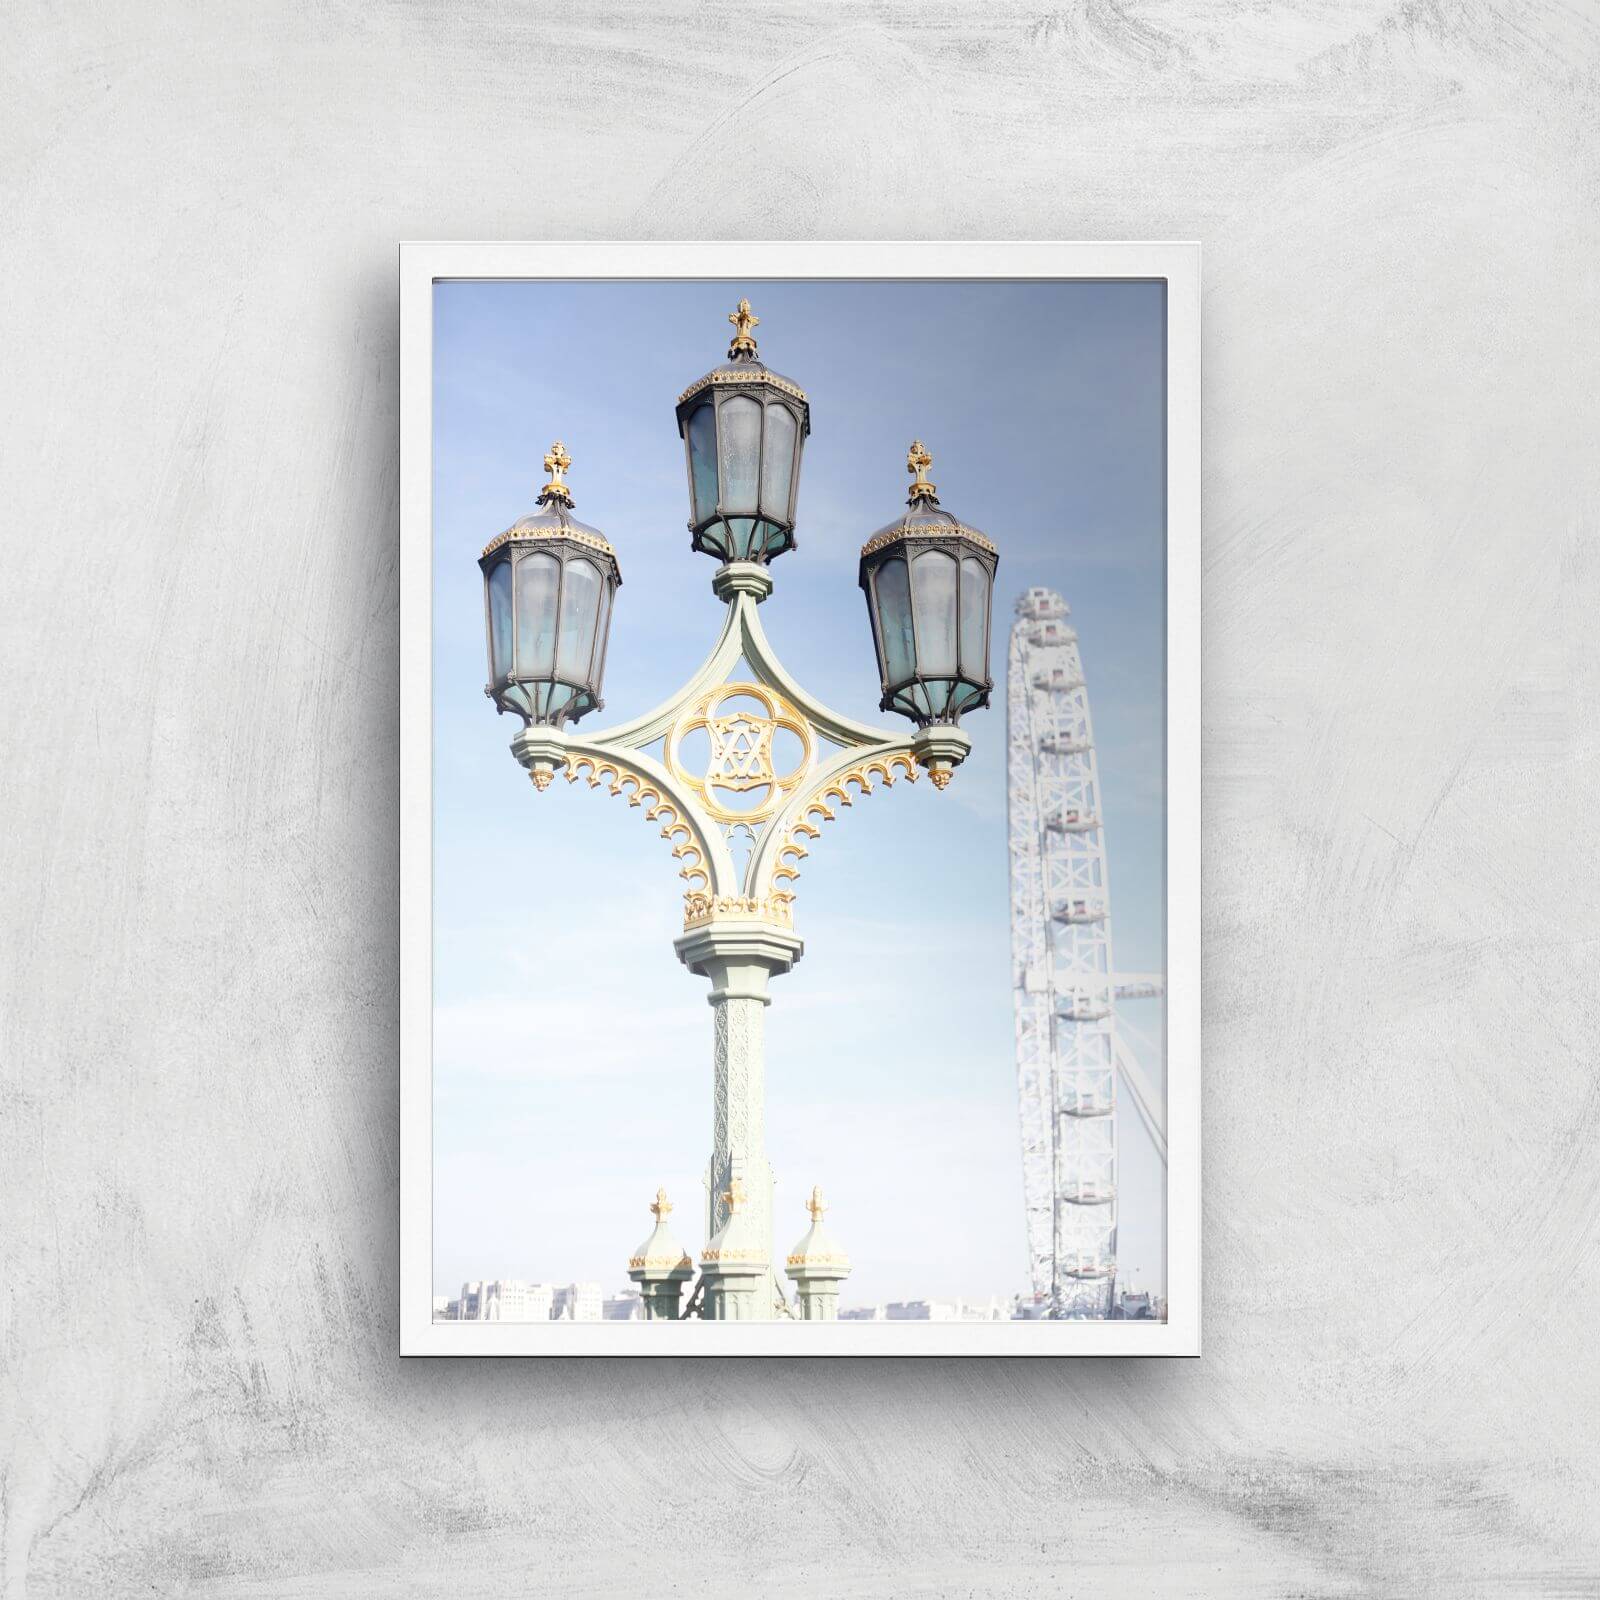 Street Lamps Giclee Art Print - A3 - White Frame